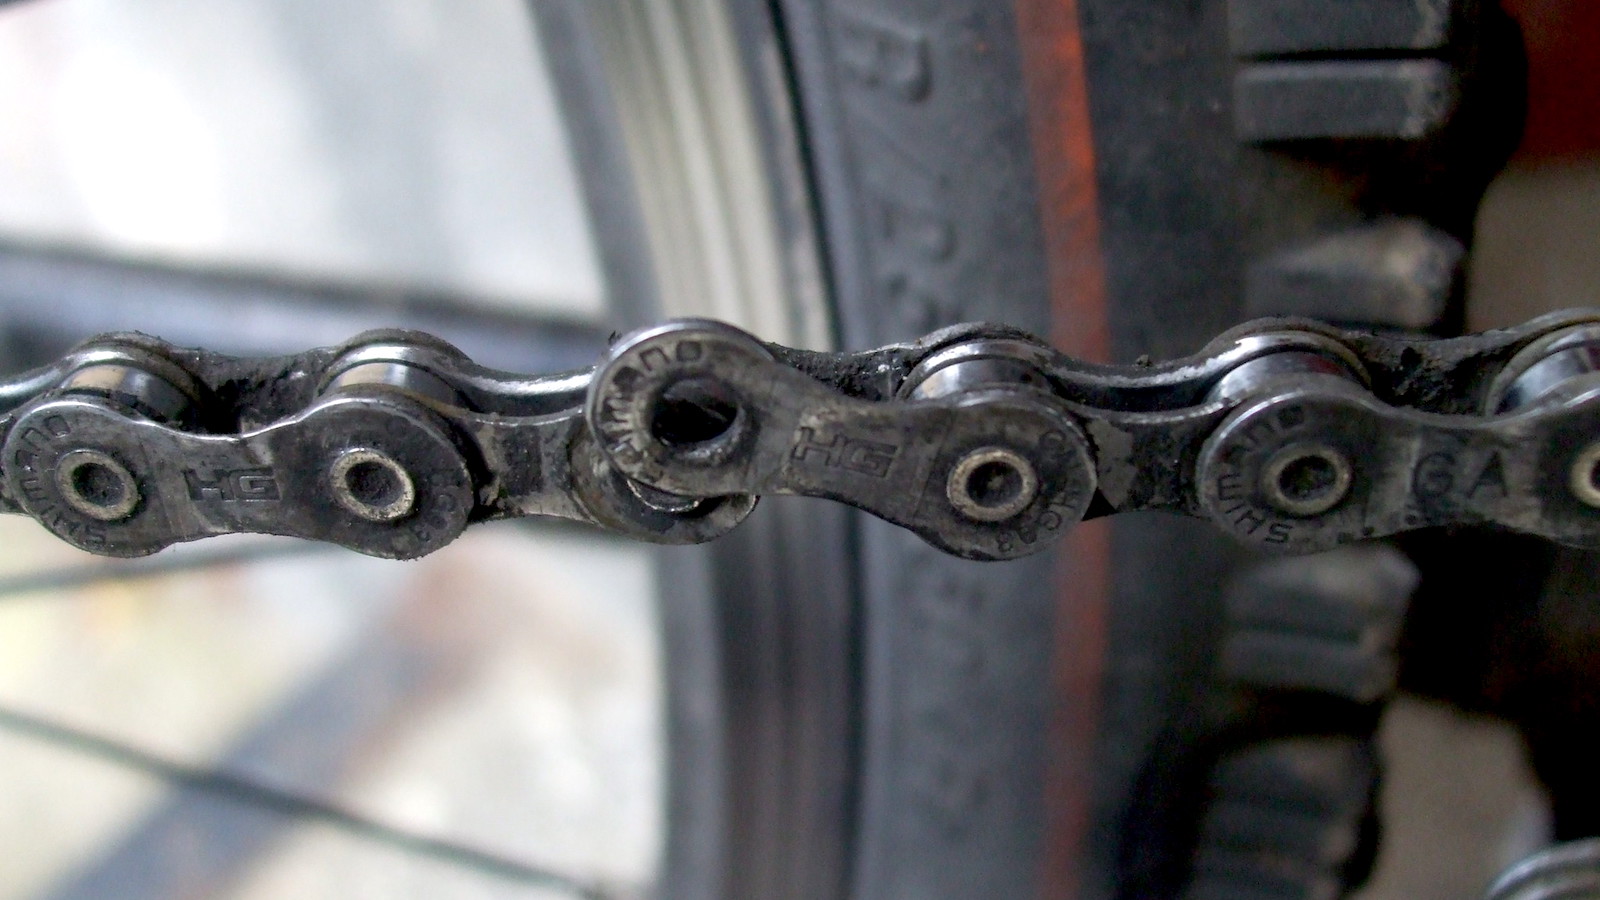 How to fix a broken bike chain - 7SZ5mKti4QnGYYgY2VgpJV